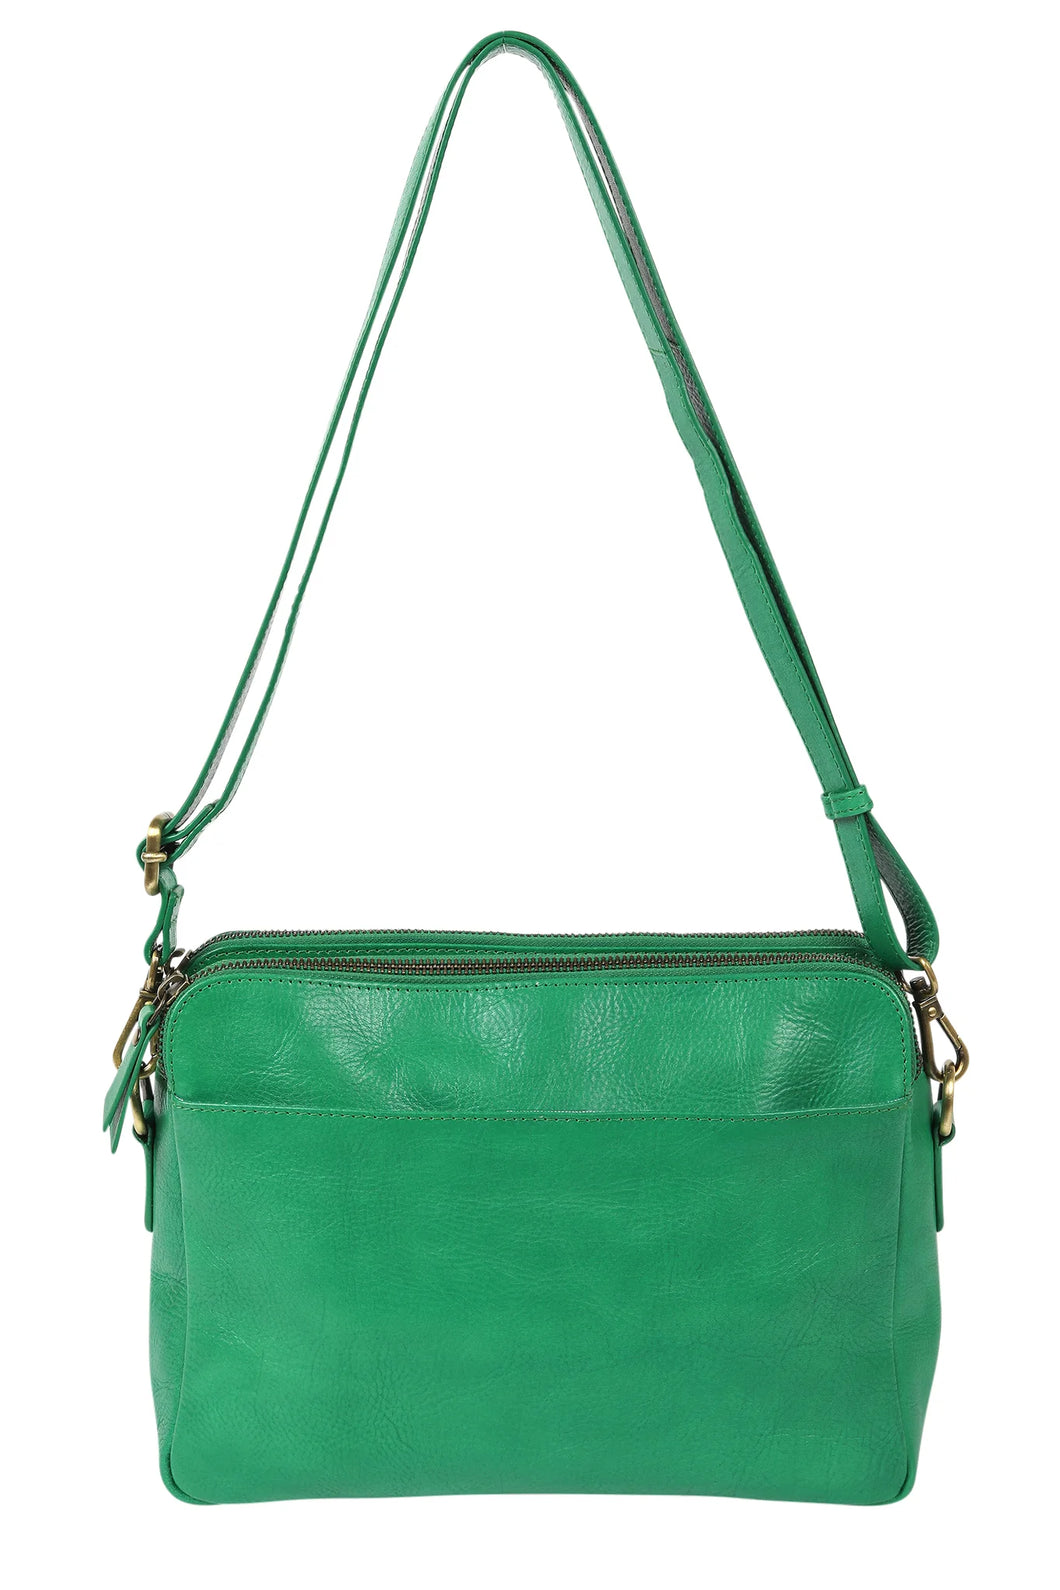 Ella Emerald Leather Handbag - Emerald Green